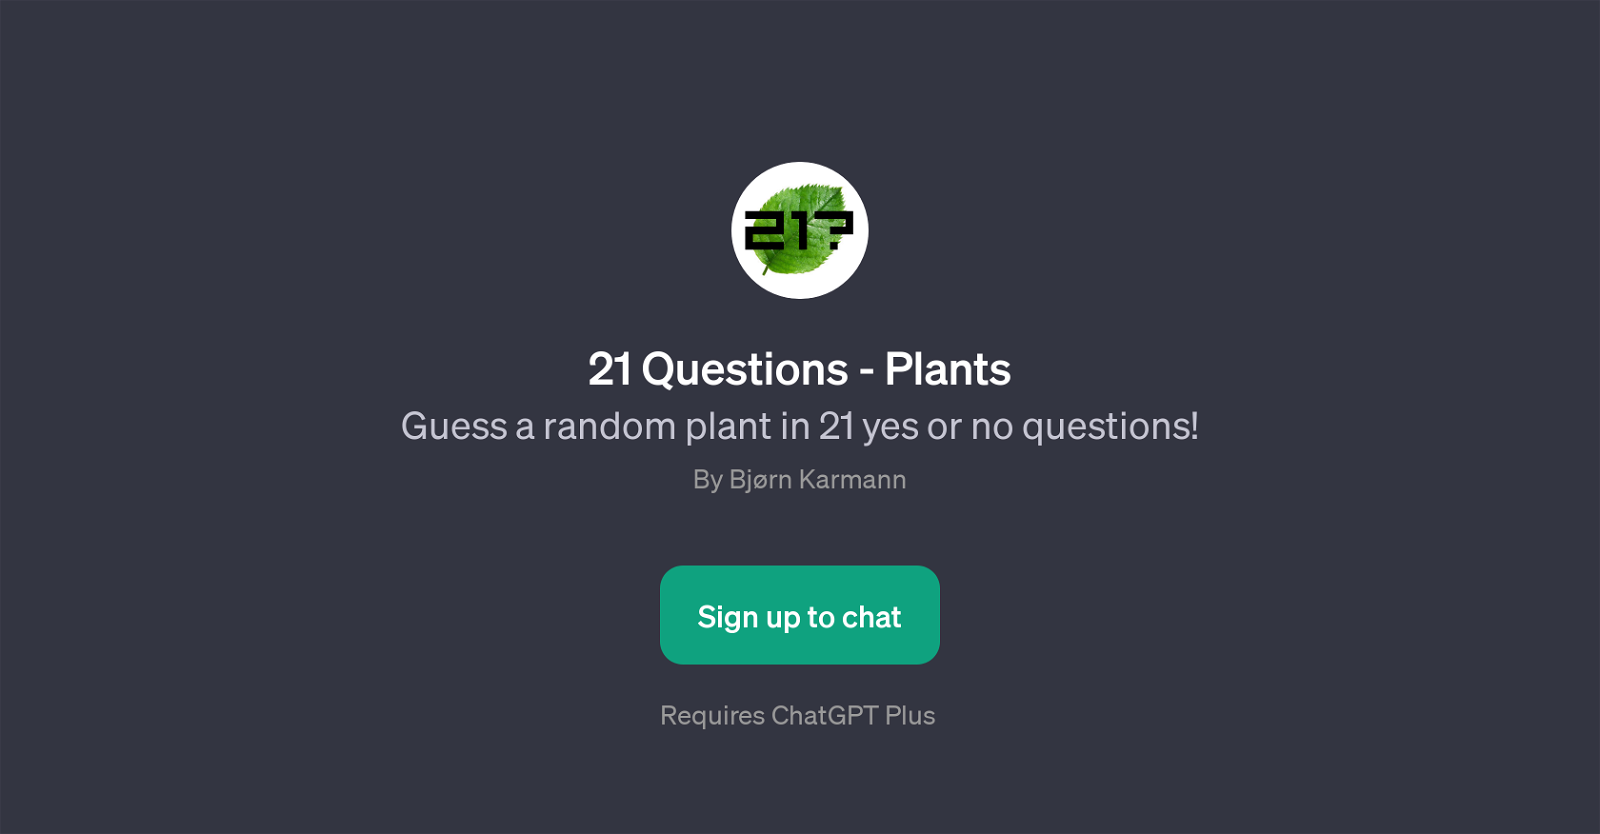 21 Questions - Plants website